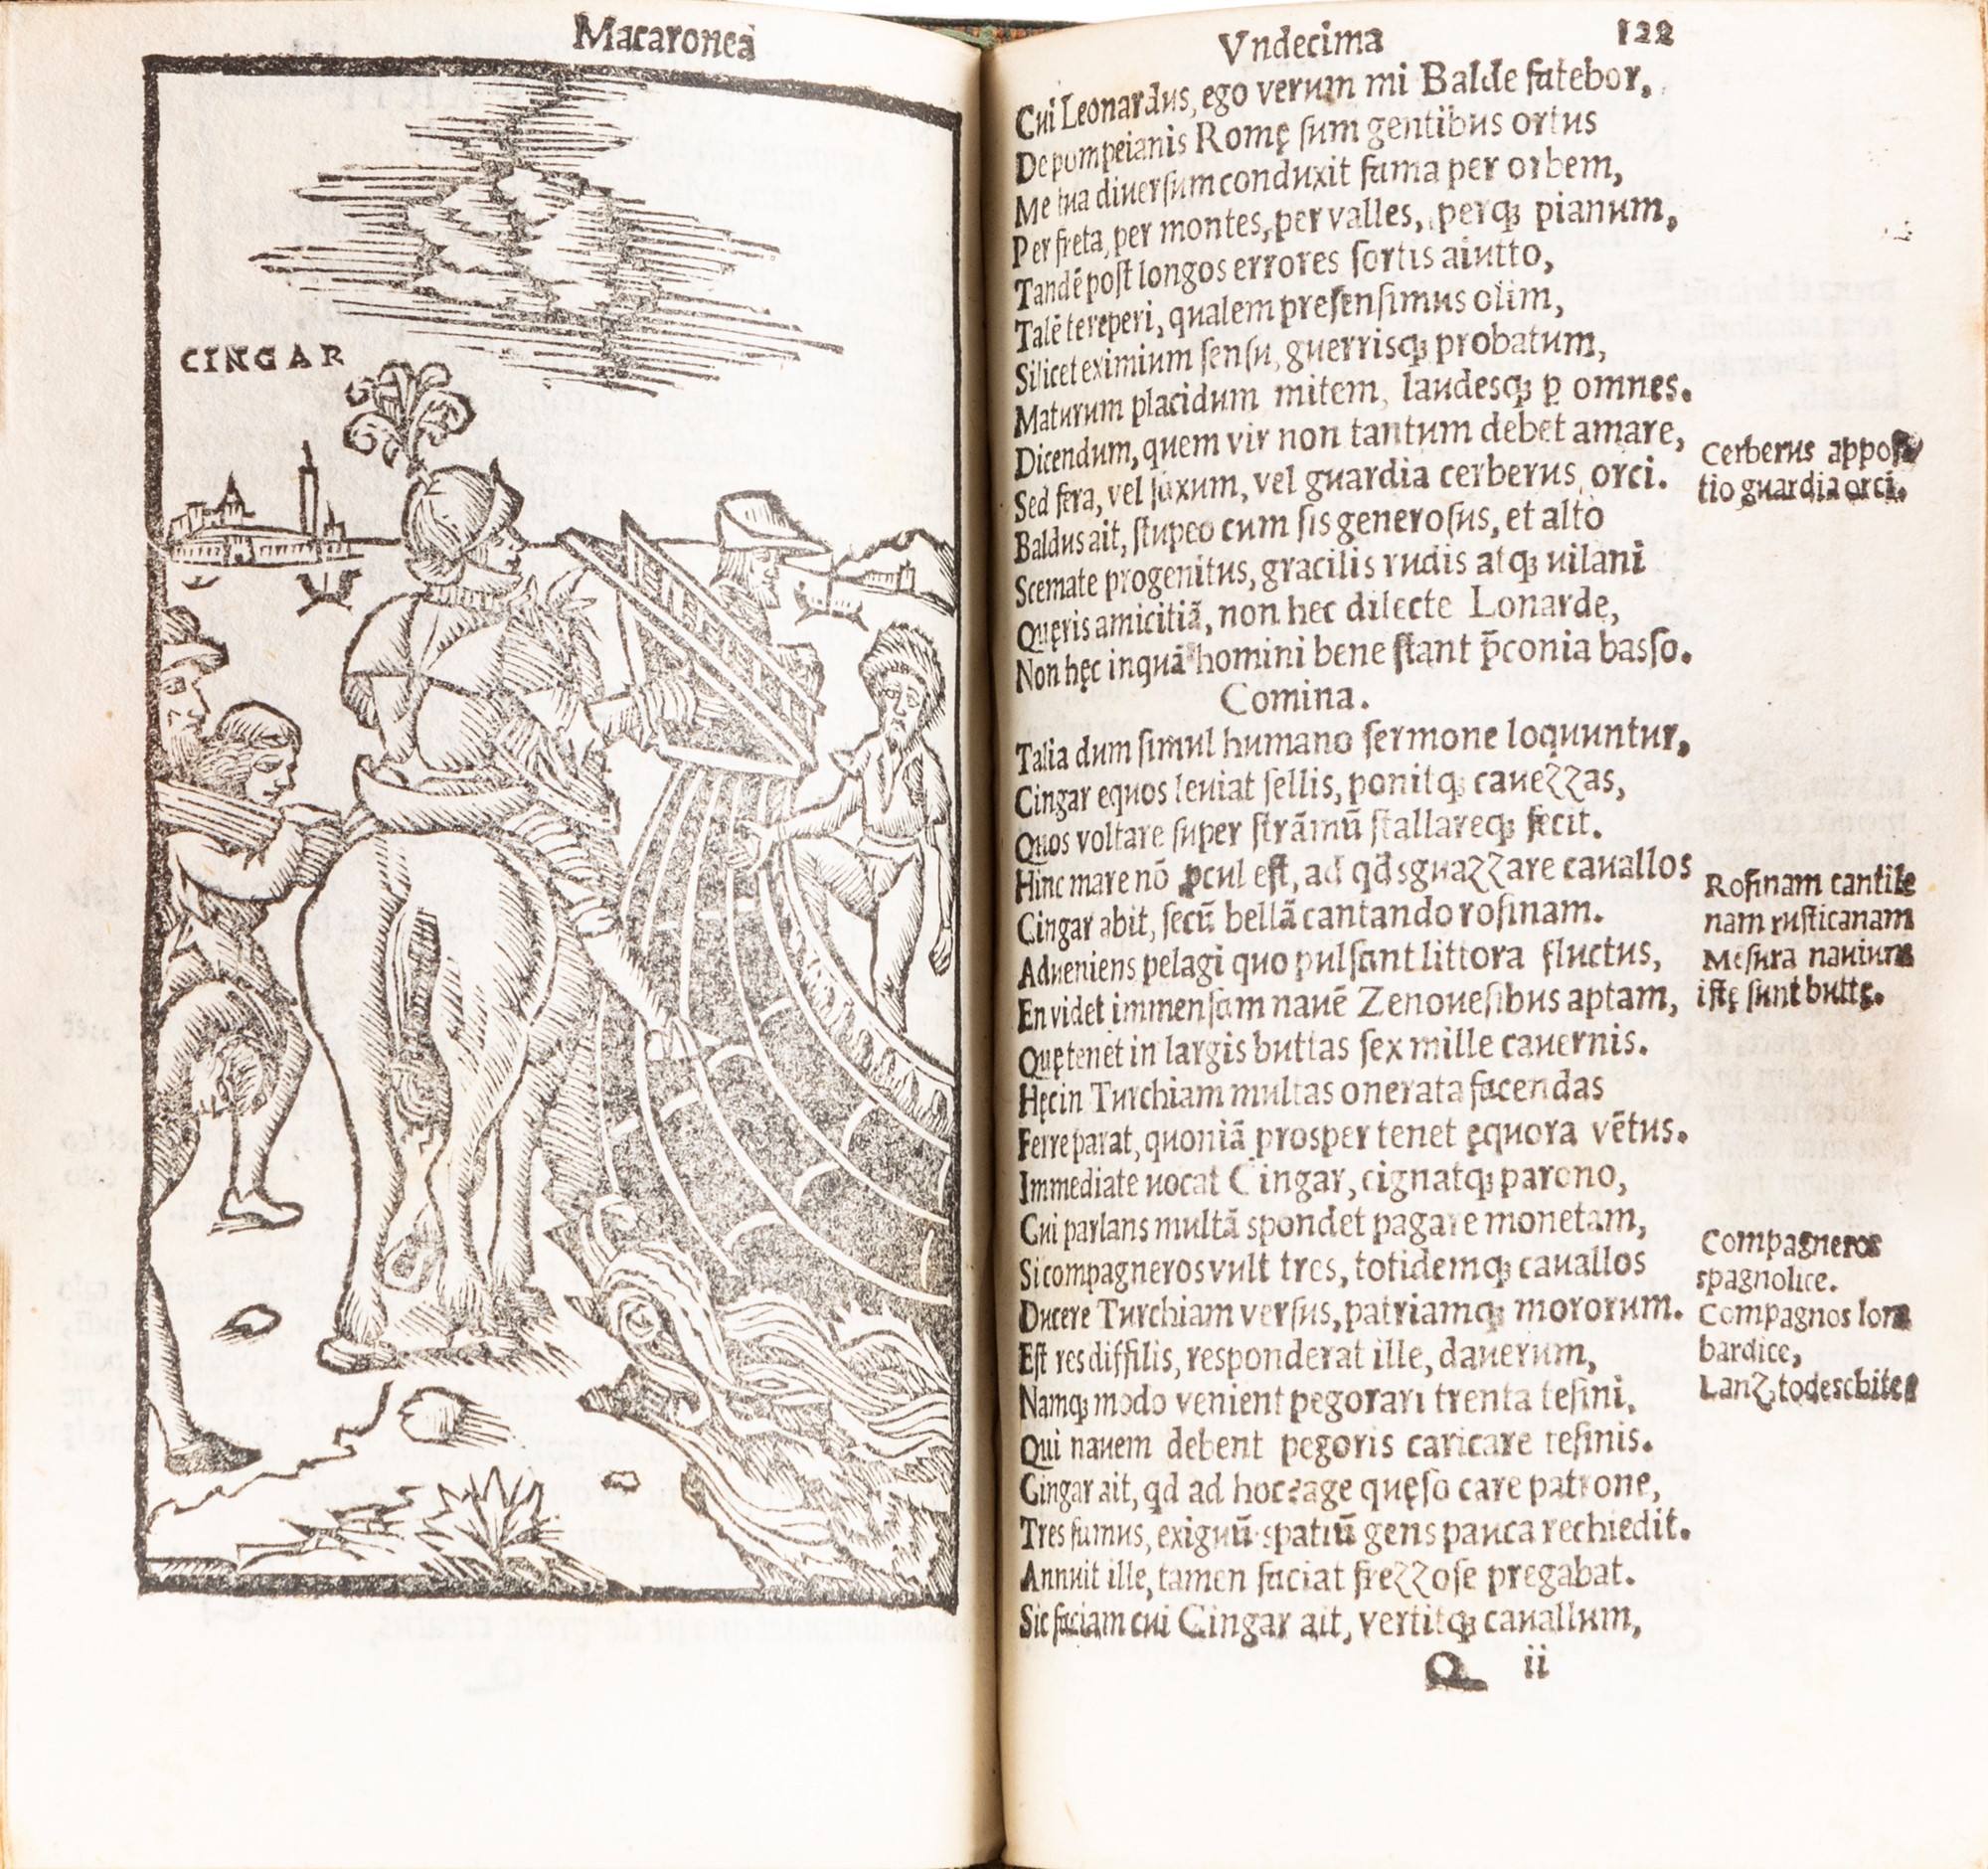 Folengo, Teofilo - Opus Merlini Cocaii poetae Mantuani Macaronicorum - Image 3 of 3